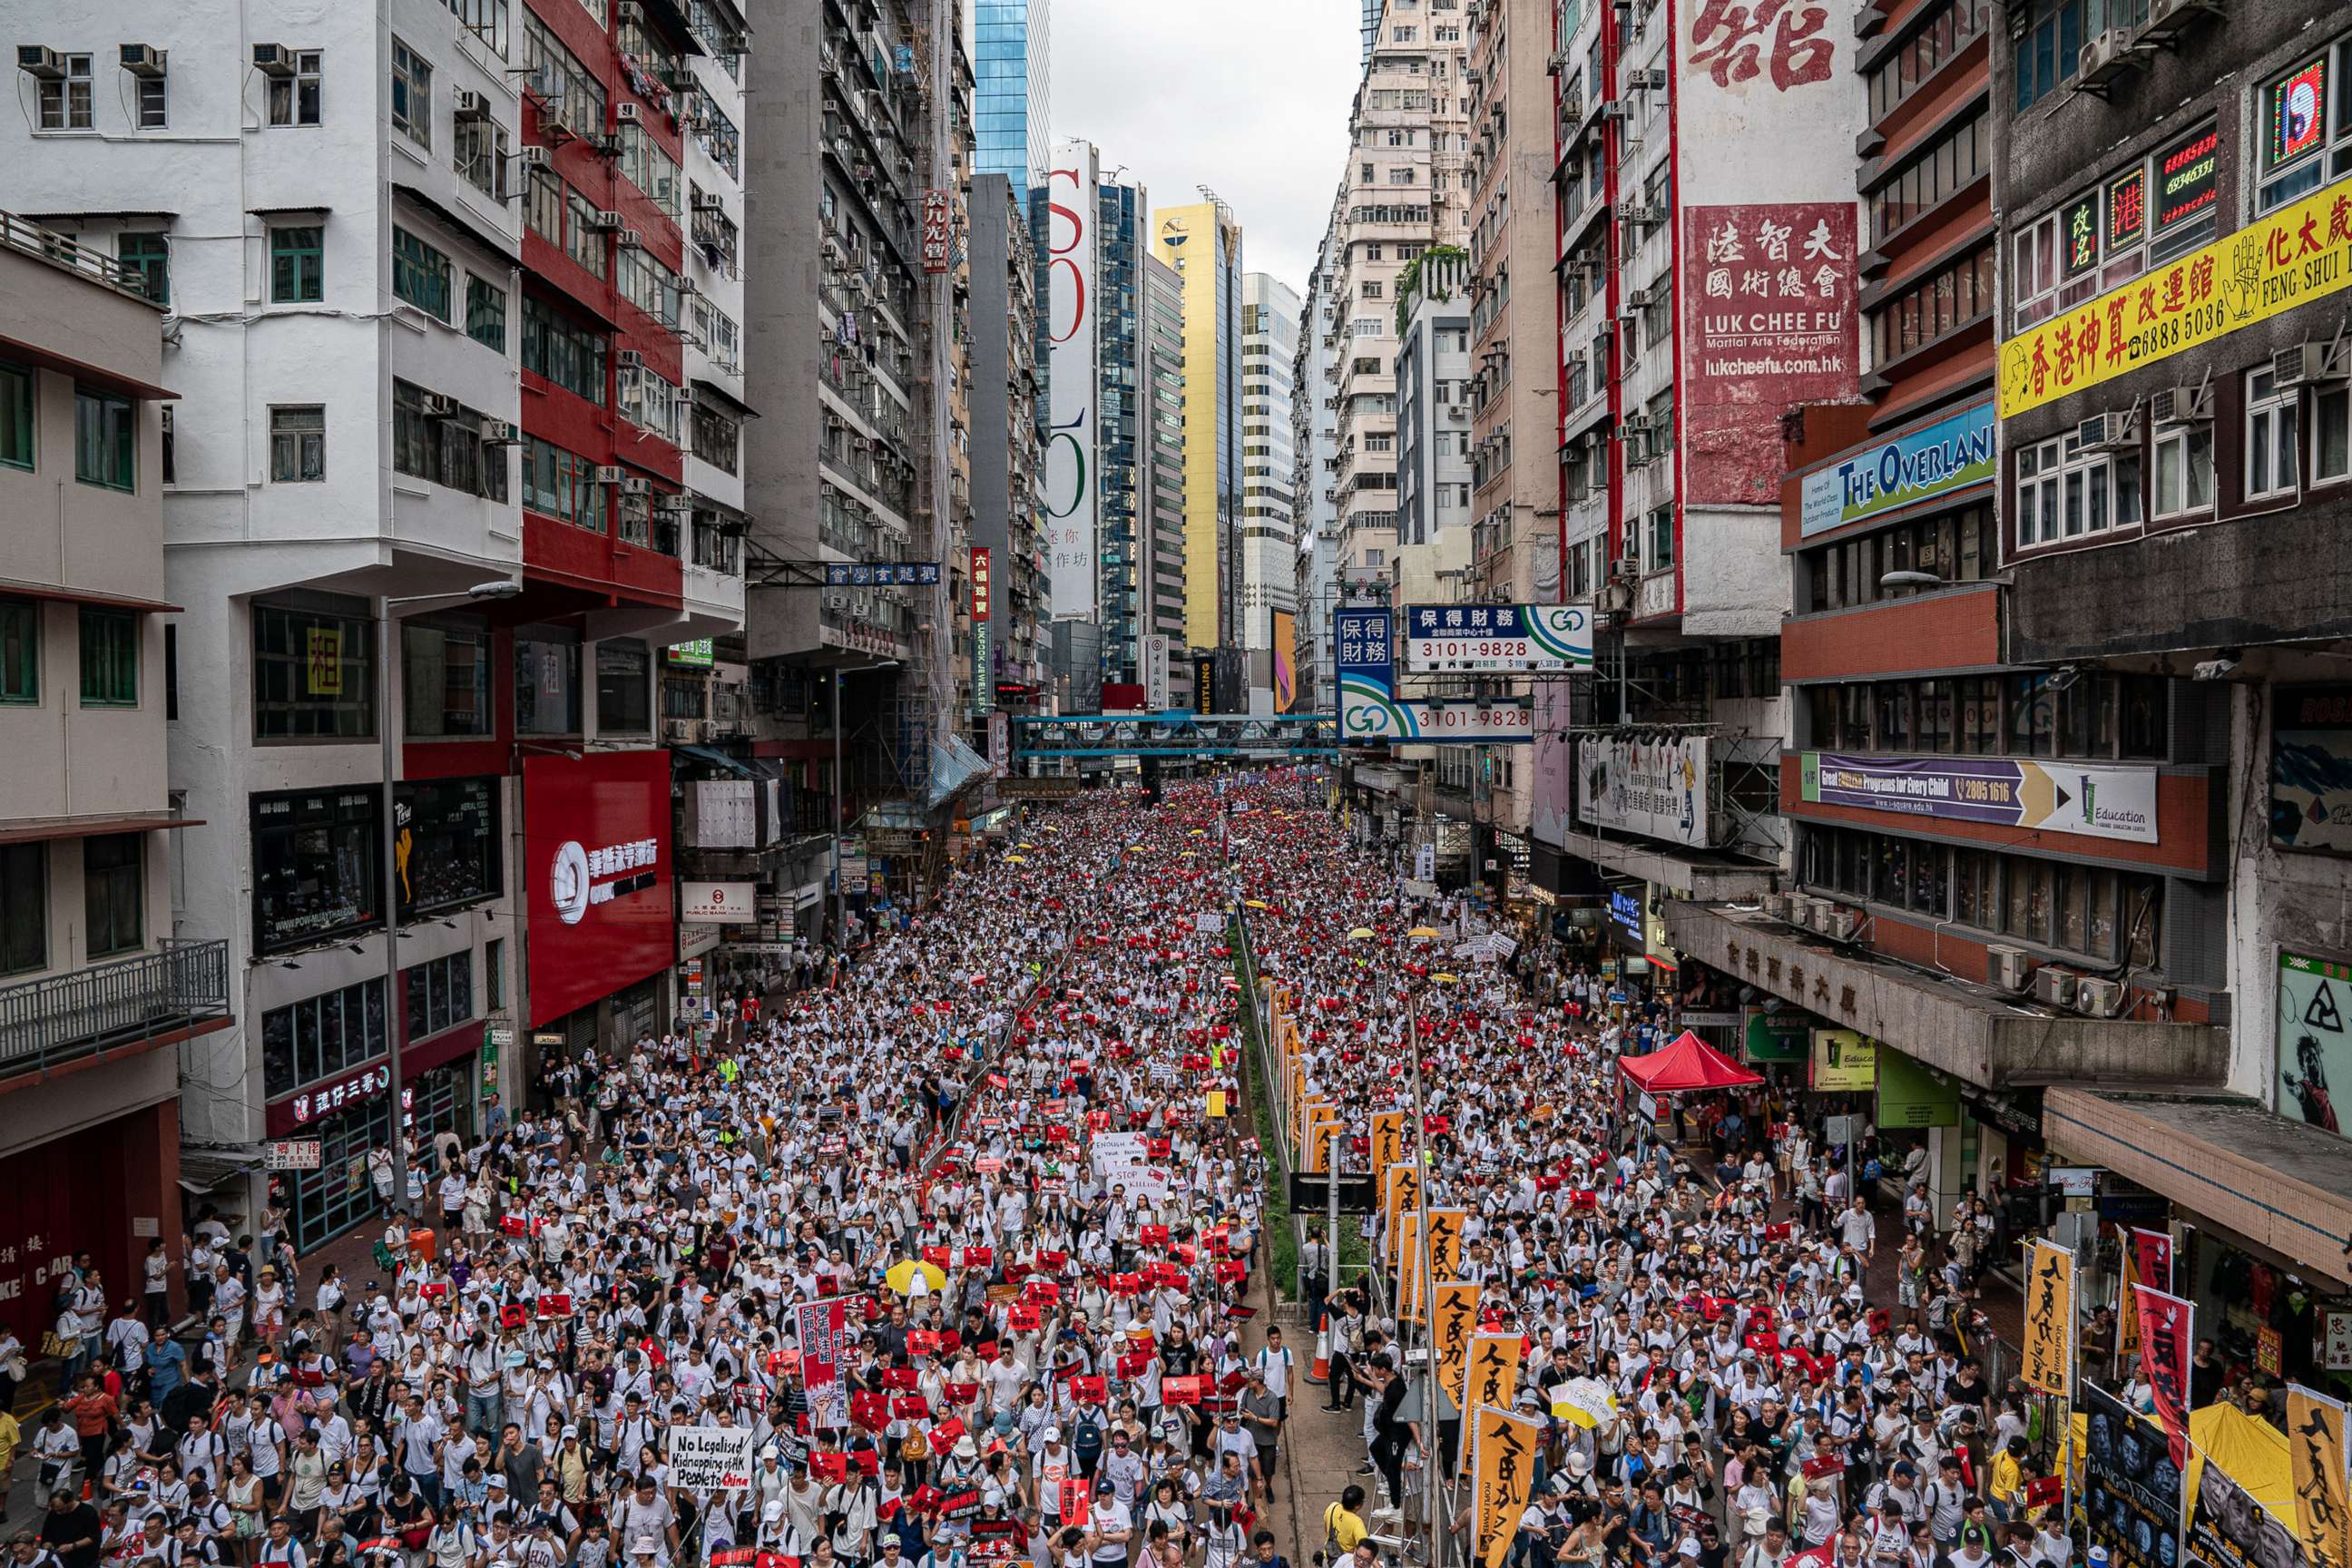 https://s.abcnews.com/images/International/hong-kong-protest-gty-ml-190611_hpMain.jpg